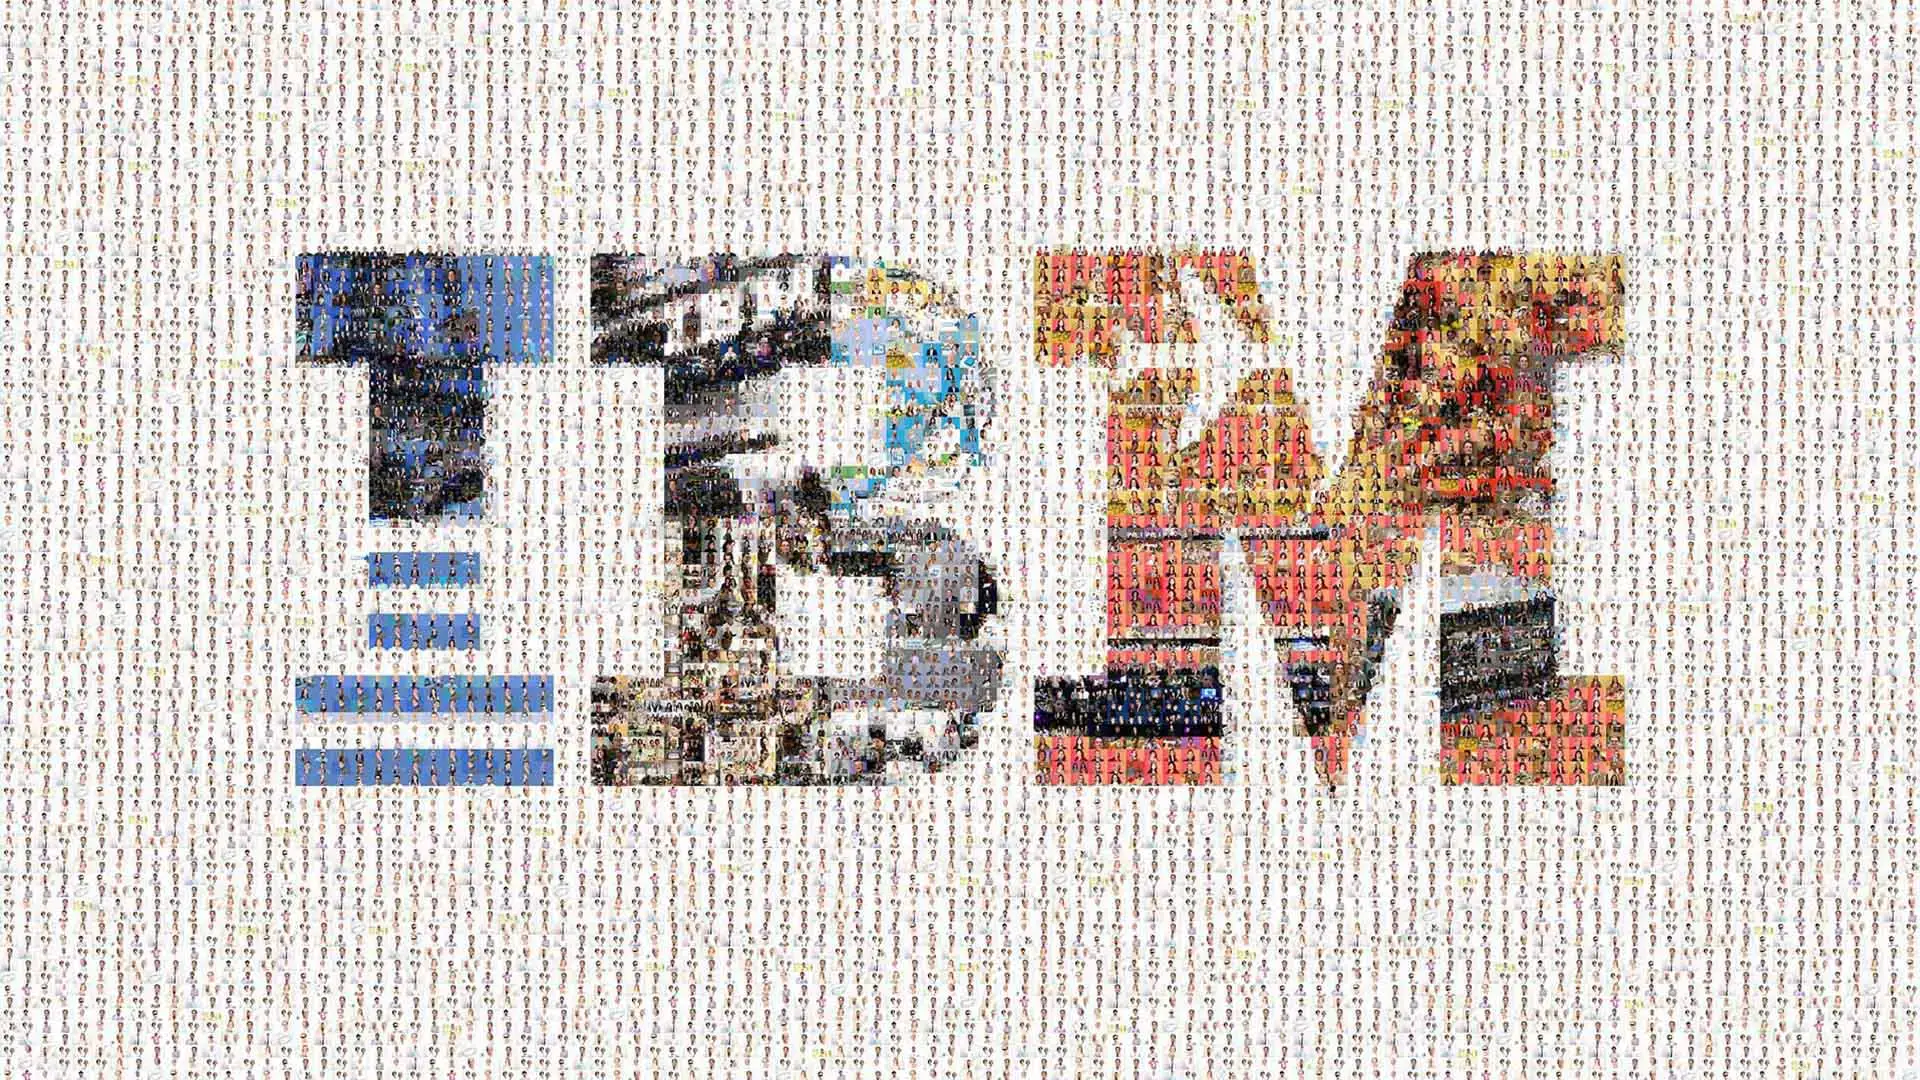 IBM digital photo mosaic animation